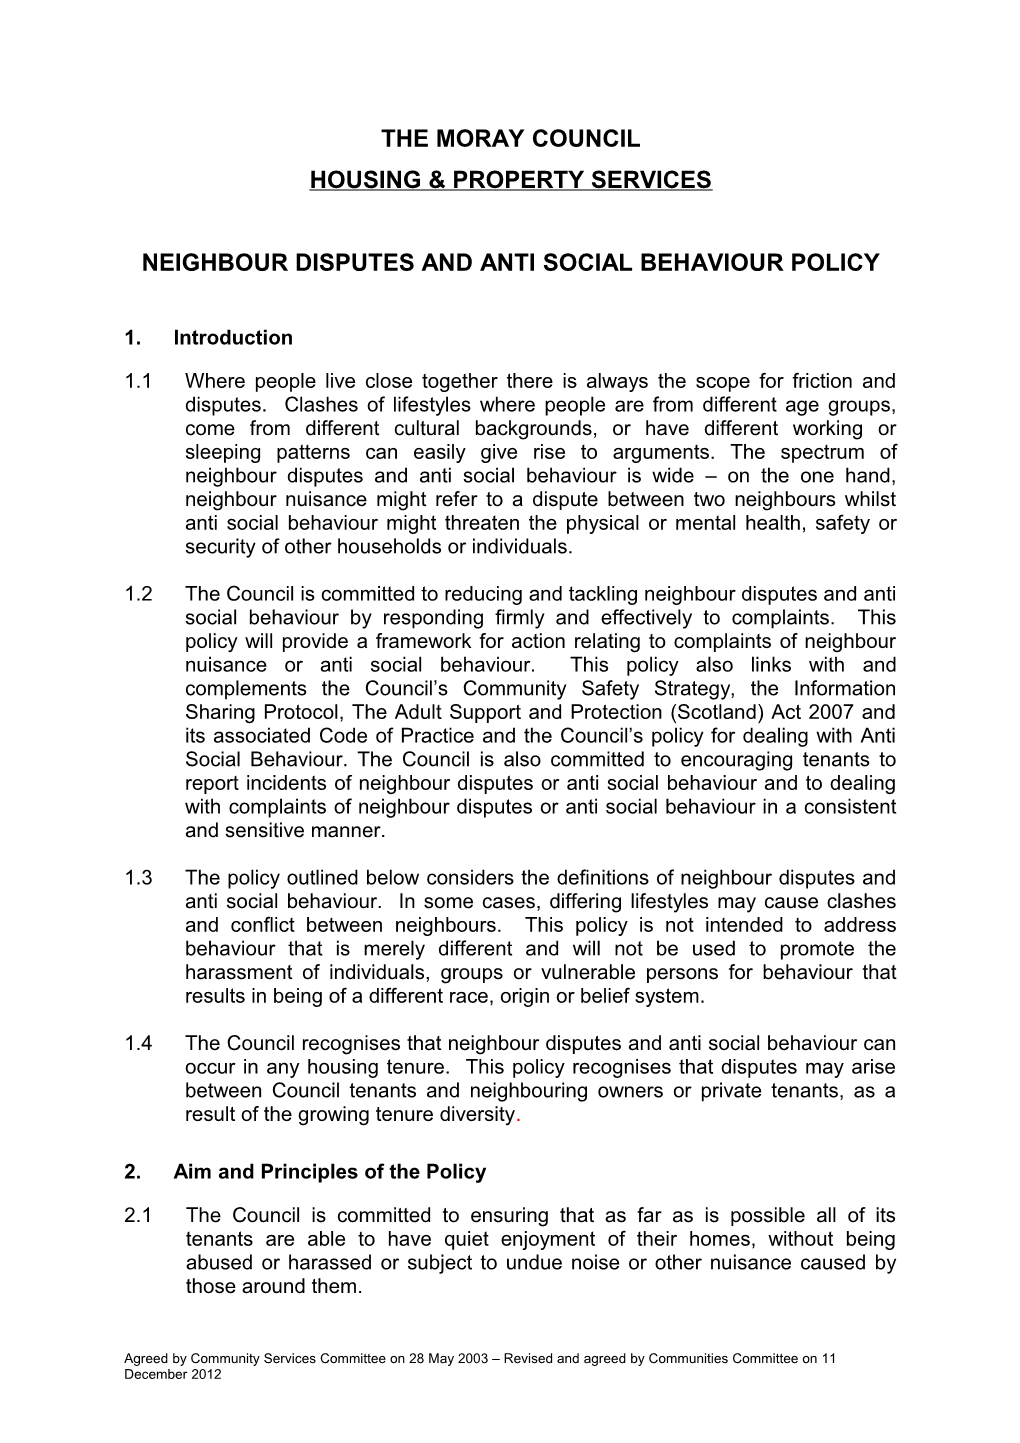 Neighbour Disputes and Anti Social Behaviour Policy